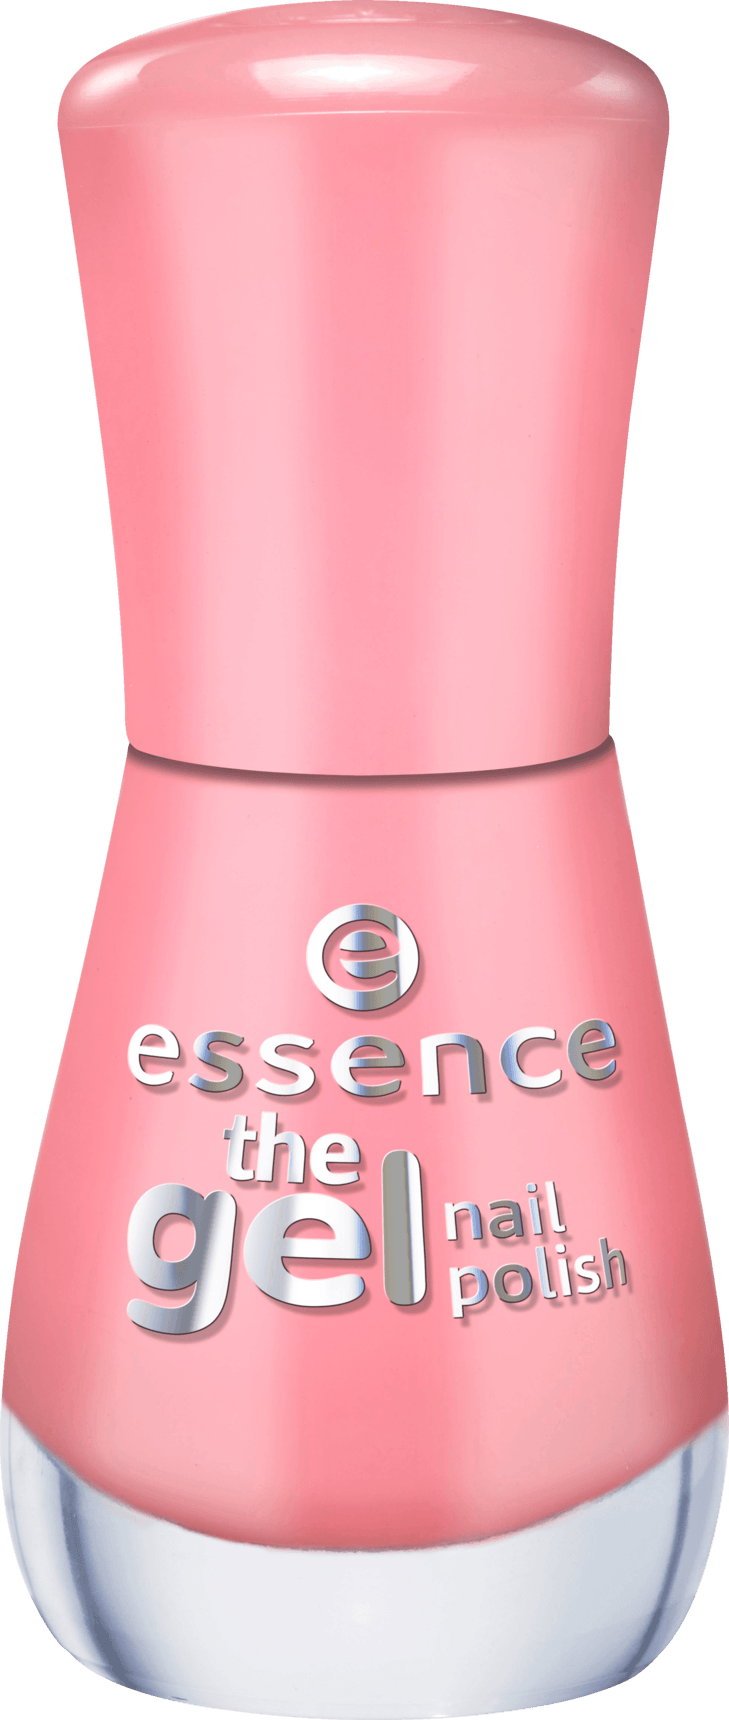 Лак essence. Лак Essence the Gel Nail Polish, 8 мл. Essence / лак для ногтей clean & strong. ЛАКESSENCE, 8ml, #18. Лаки для ногтей Essence цвета.